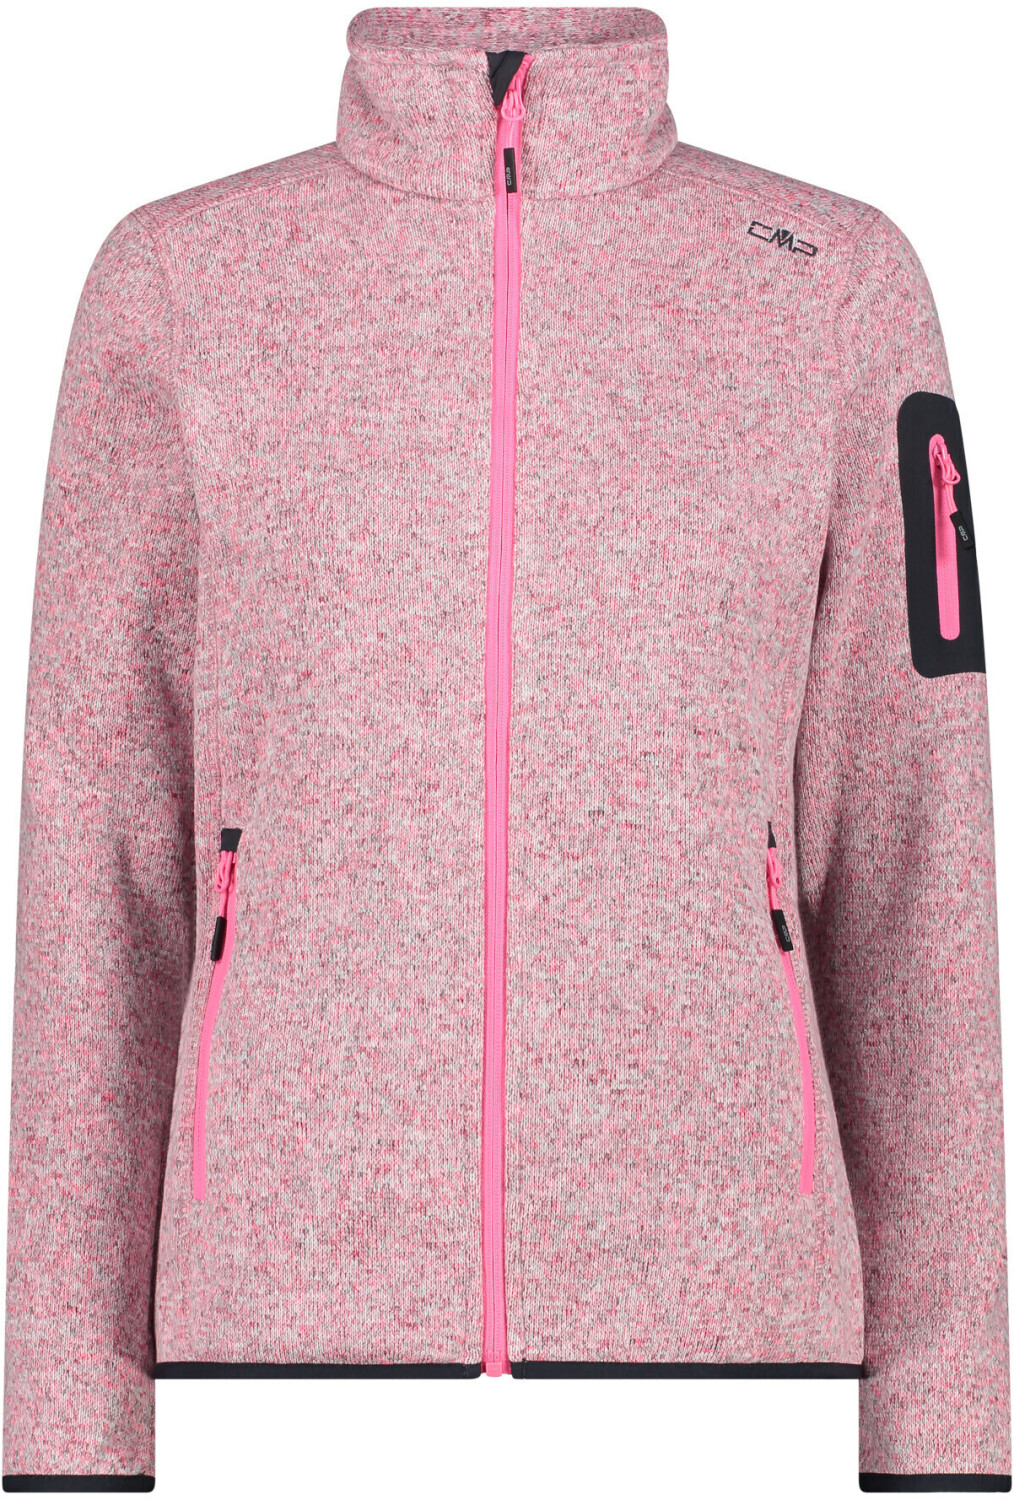 Buy CMP on Knit-Tech Jacket (Today) Deals (3H14746) £34.99 fluo-bianco from Fleece – Best pink Melange